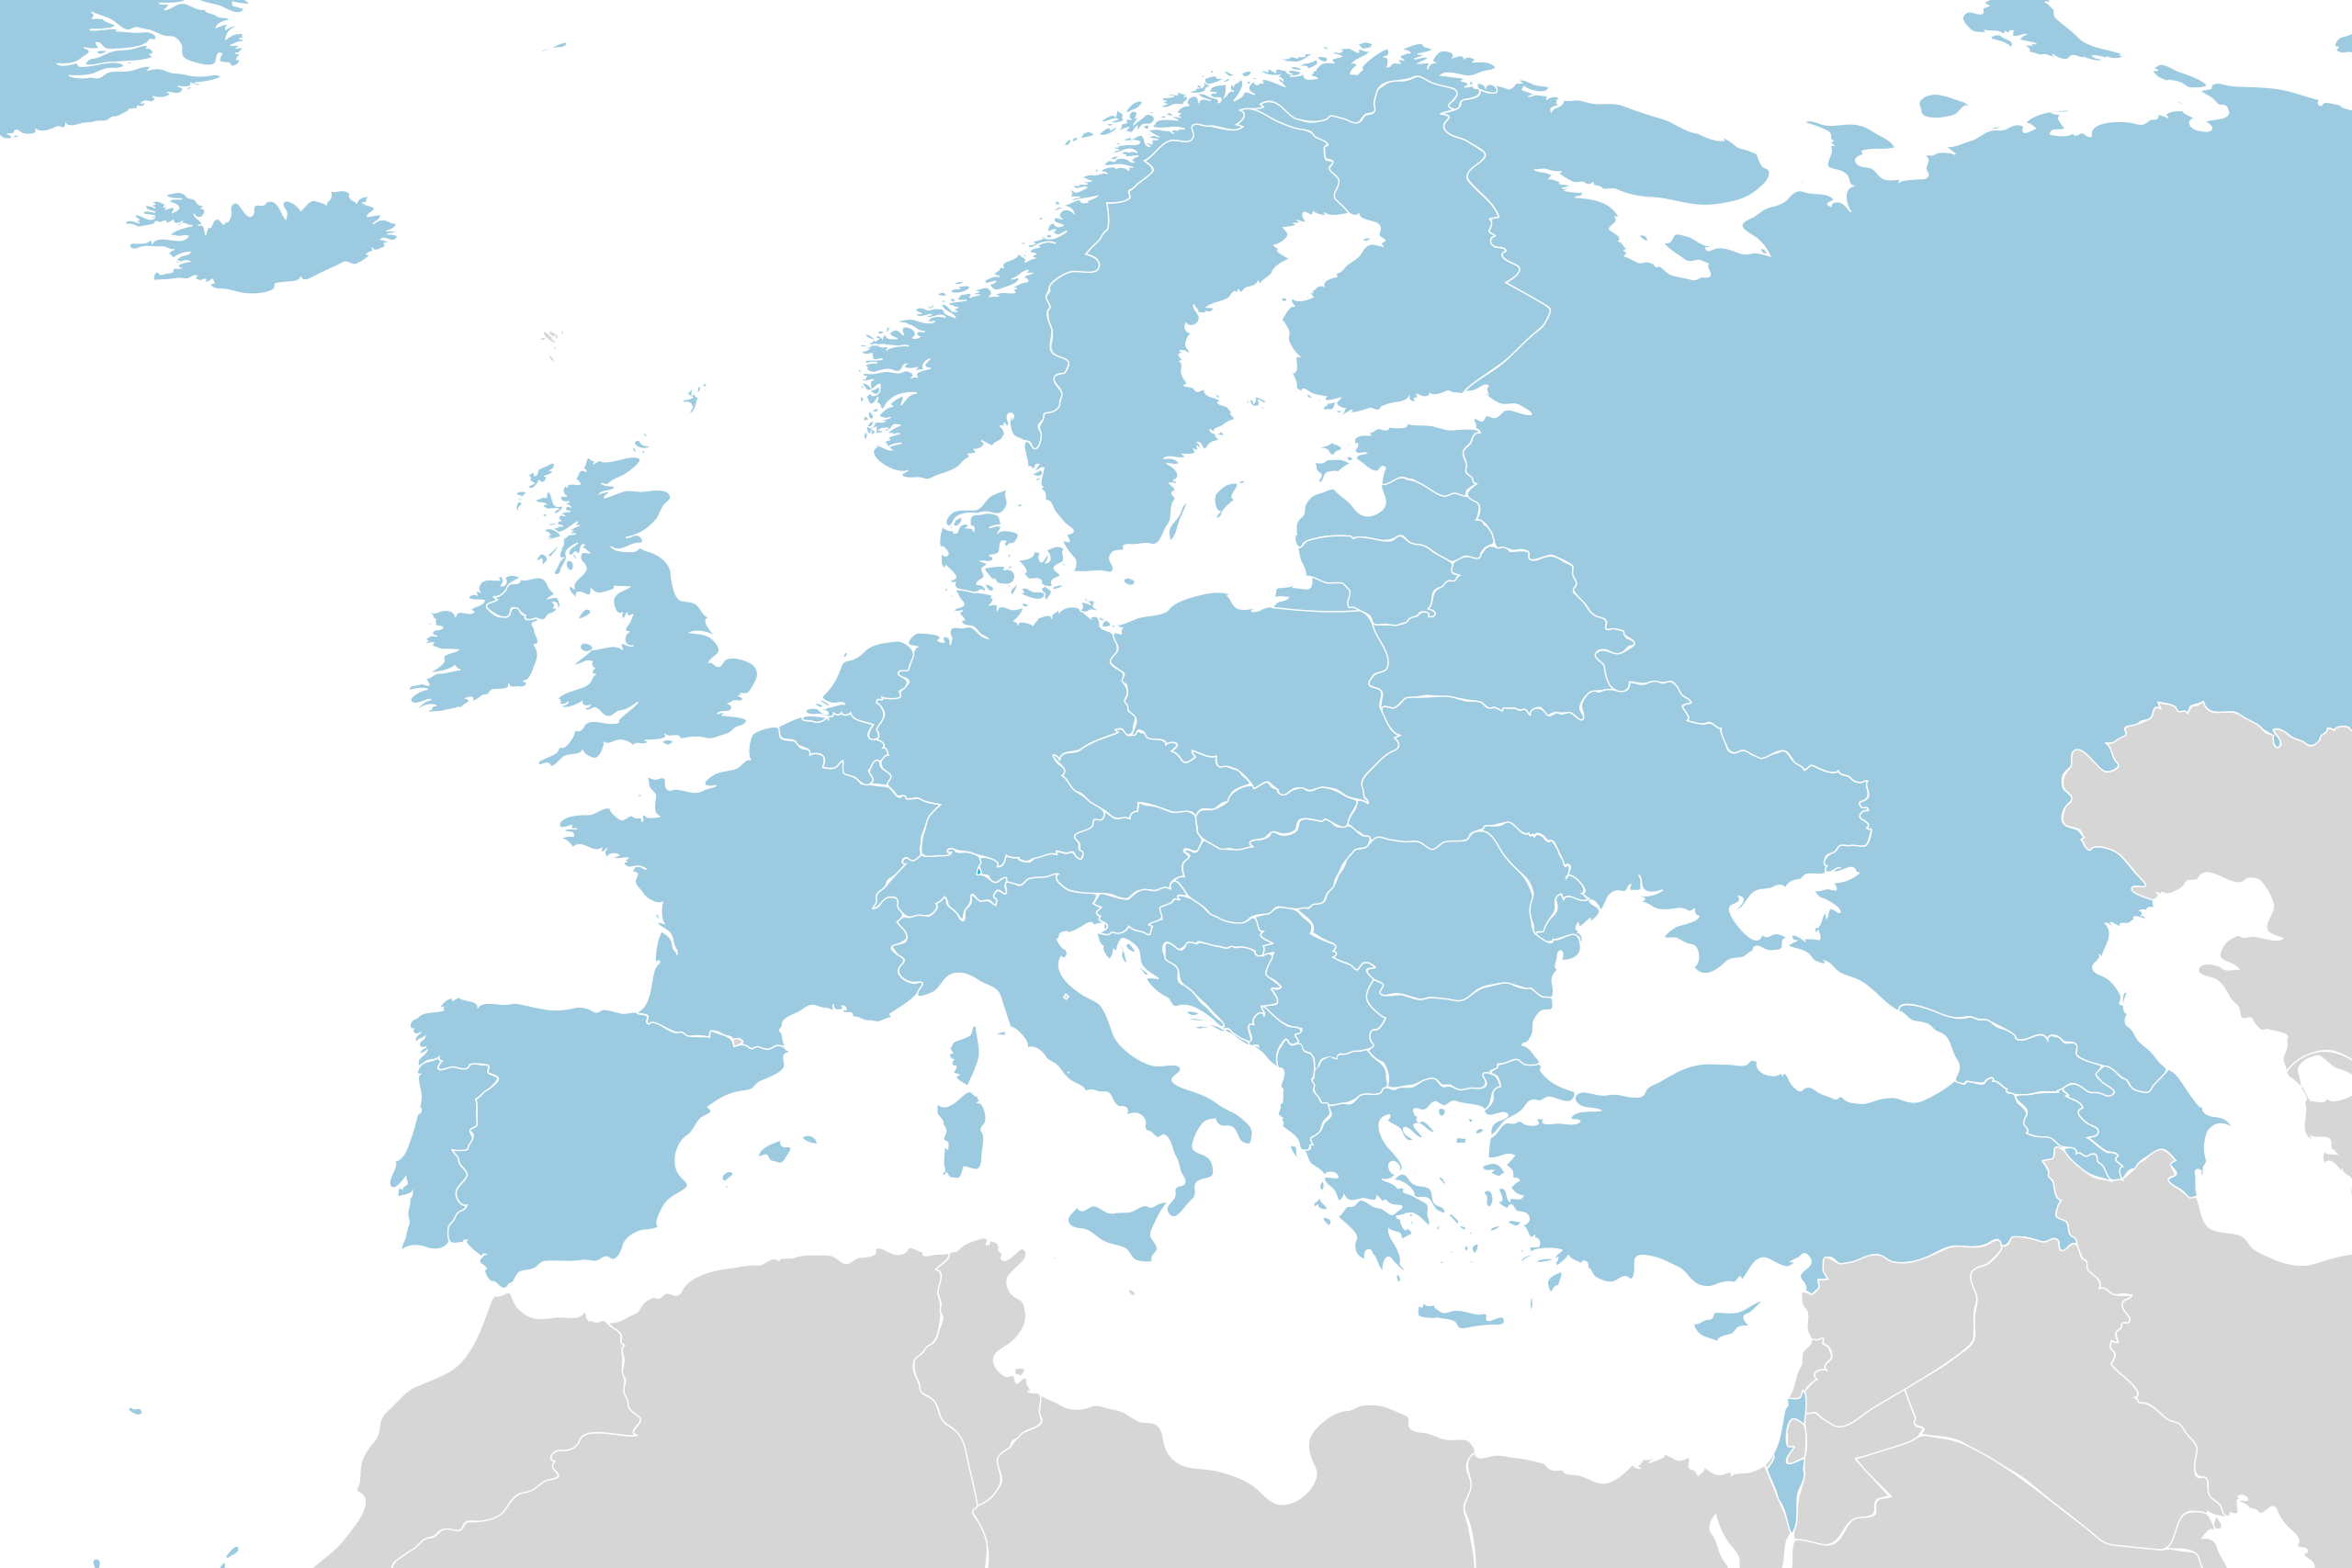 Страны без фона. Европа схематично. Европа без стран. Европа без фона. Векторная карта Европы.